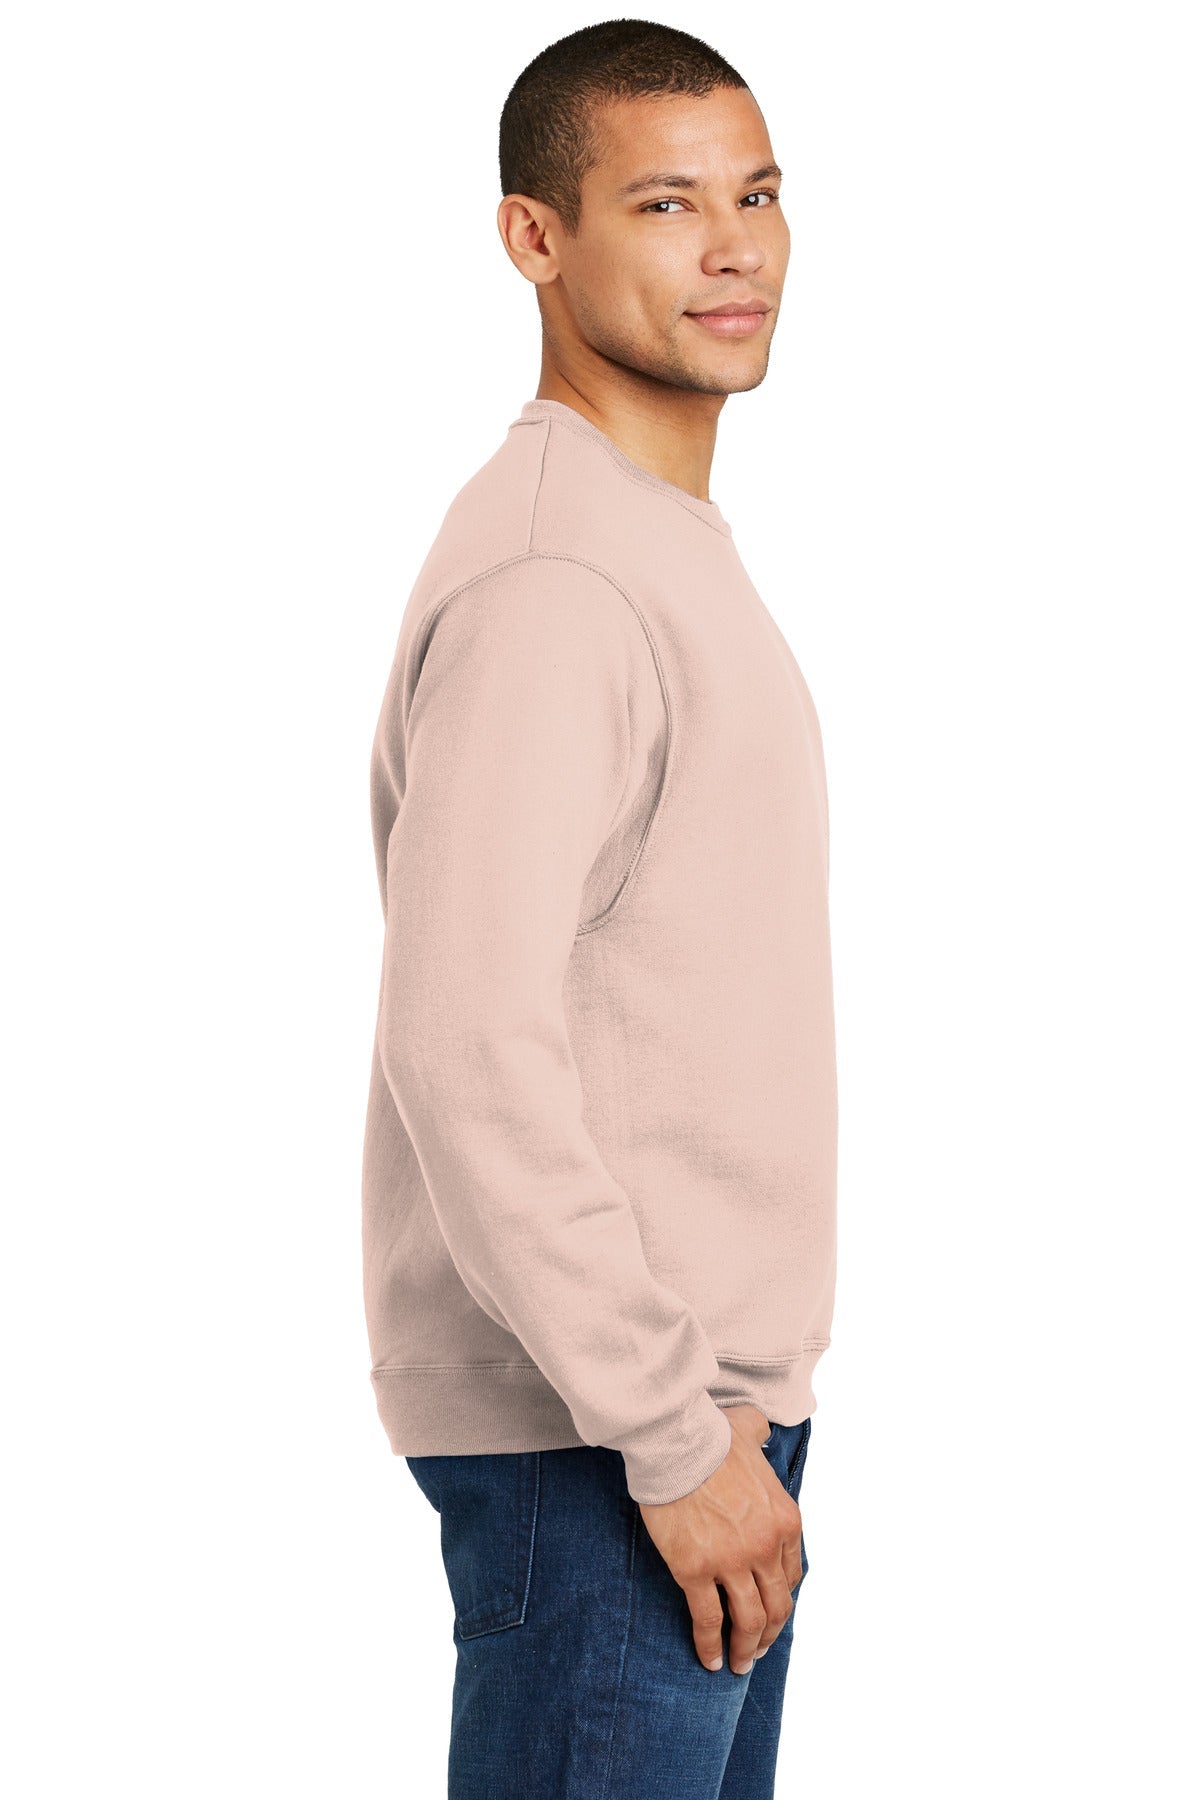 JERZEES® - NuBlend® Crewneck Sweatshirt. 562M [Blush Pink] - DFW Impression